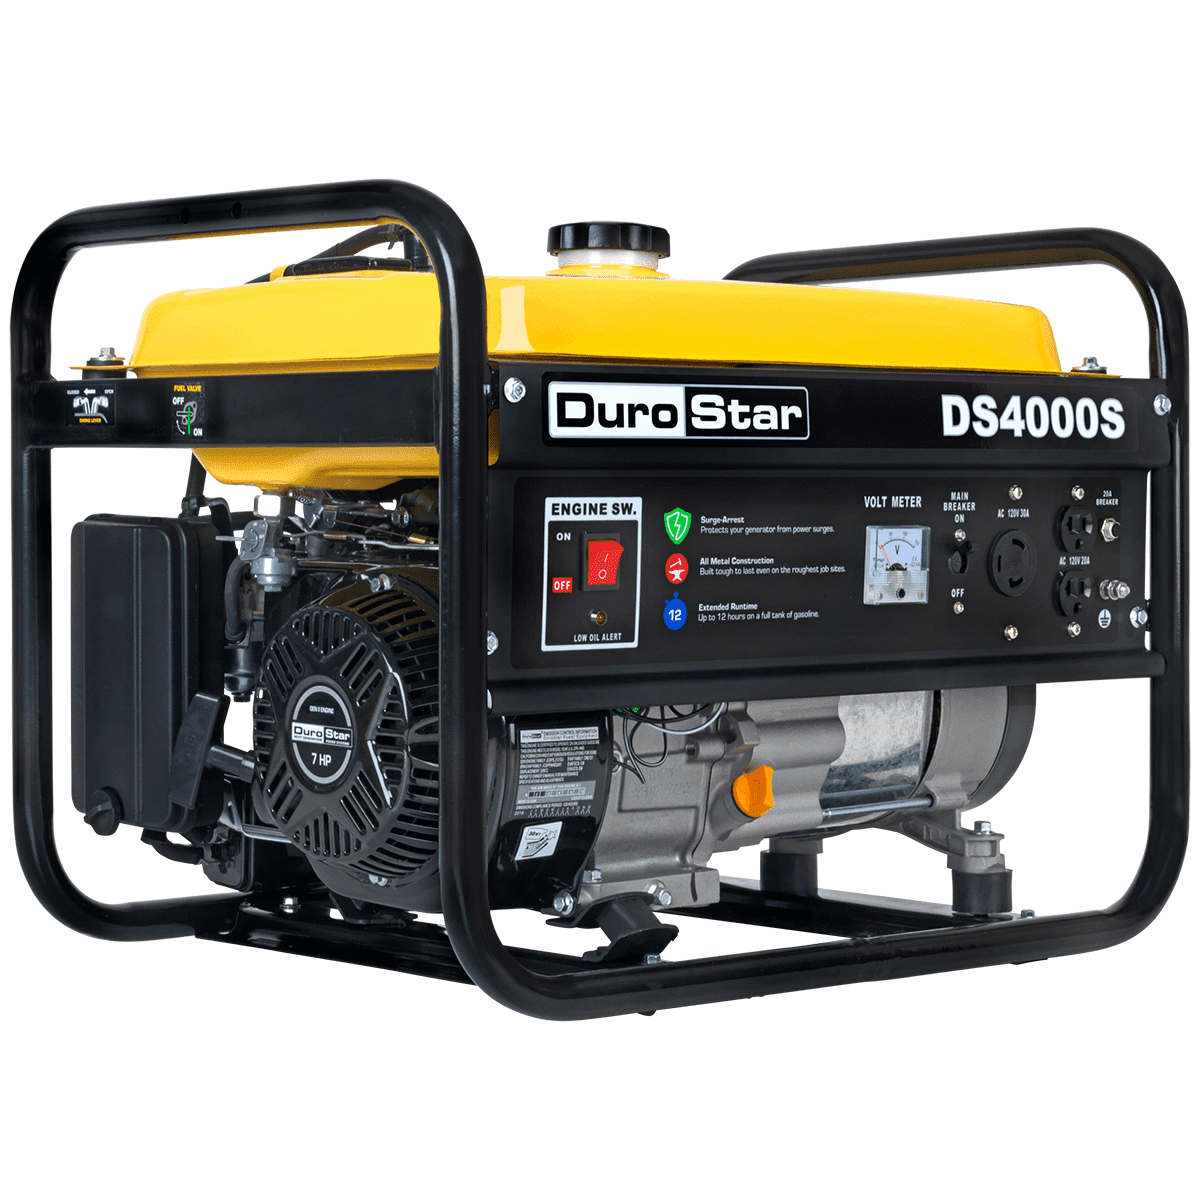 DuroStar DS4000S 208cc Air Gas Engine Portable RV Generator Walmart.com